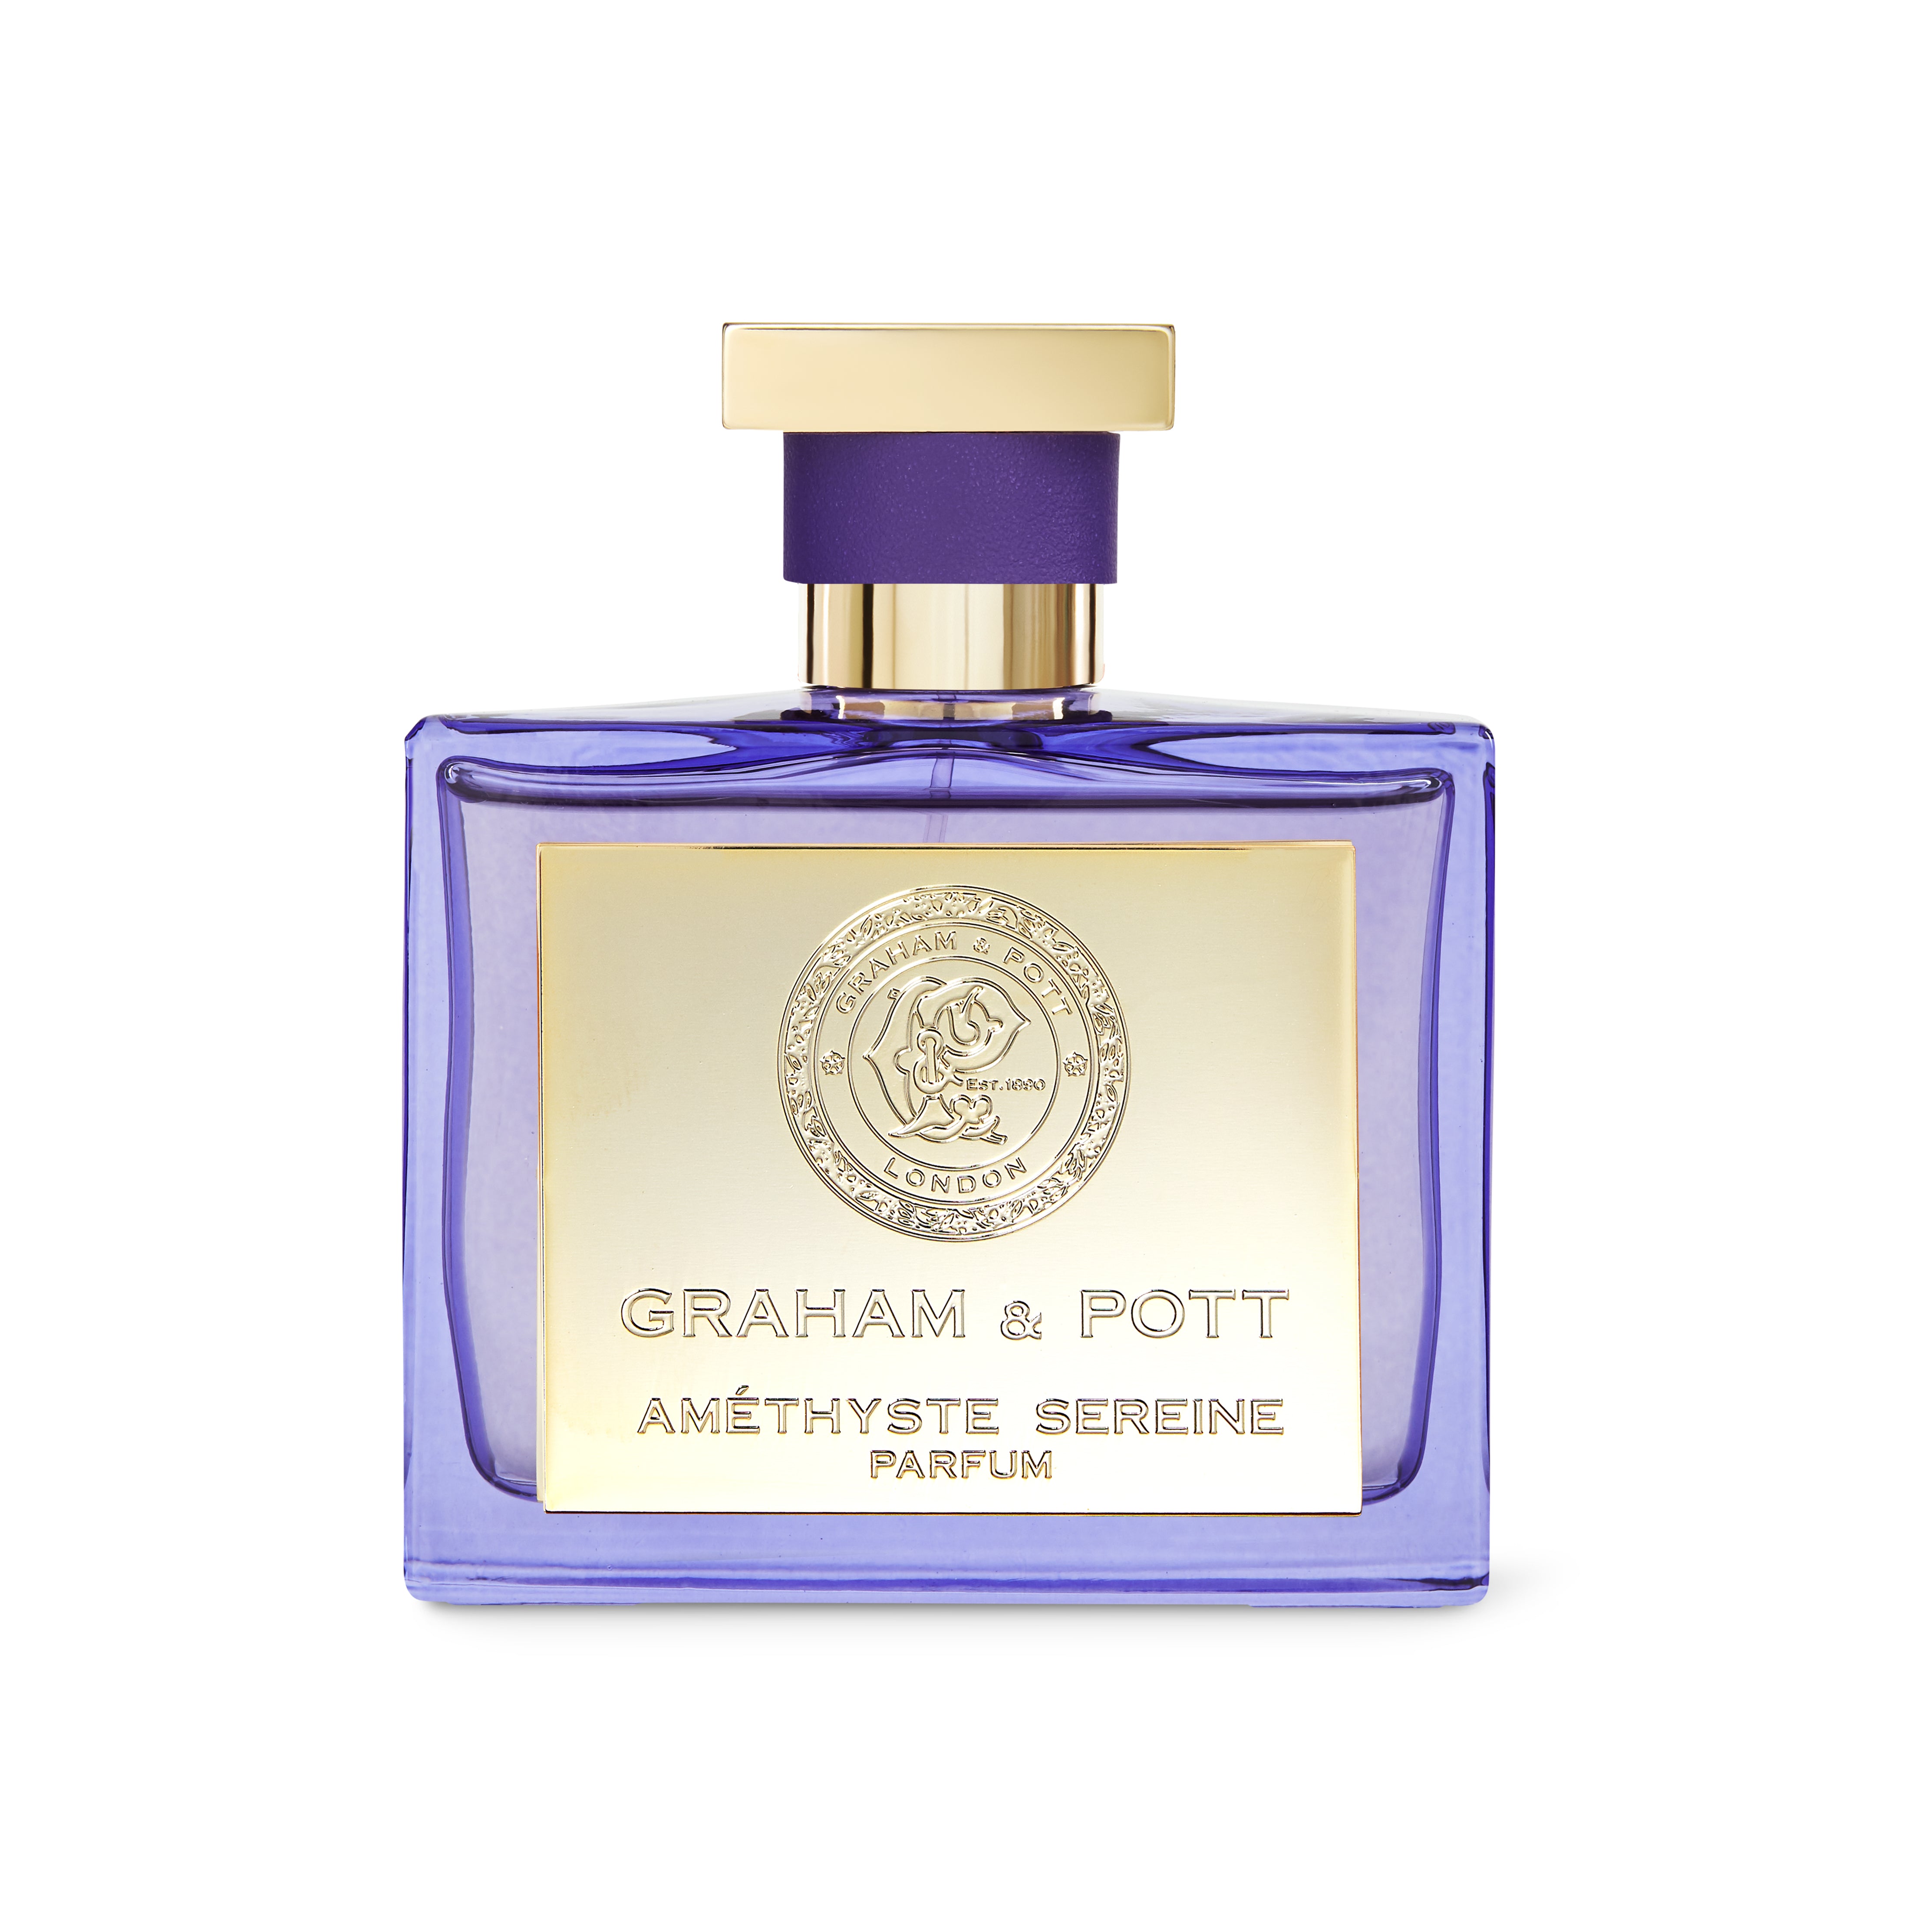 AMÉTHYSTE SEREINE Parfum - GRAHAM & POTT